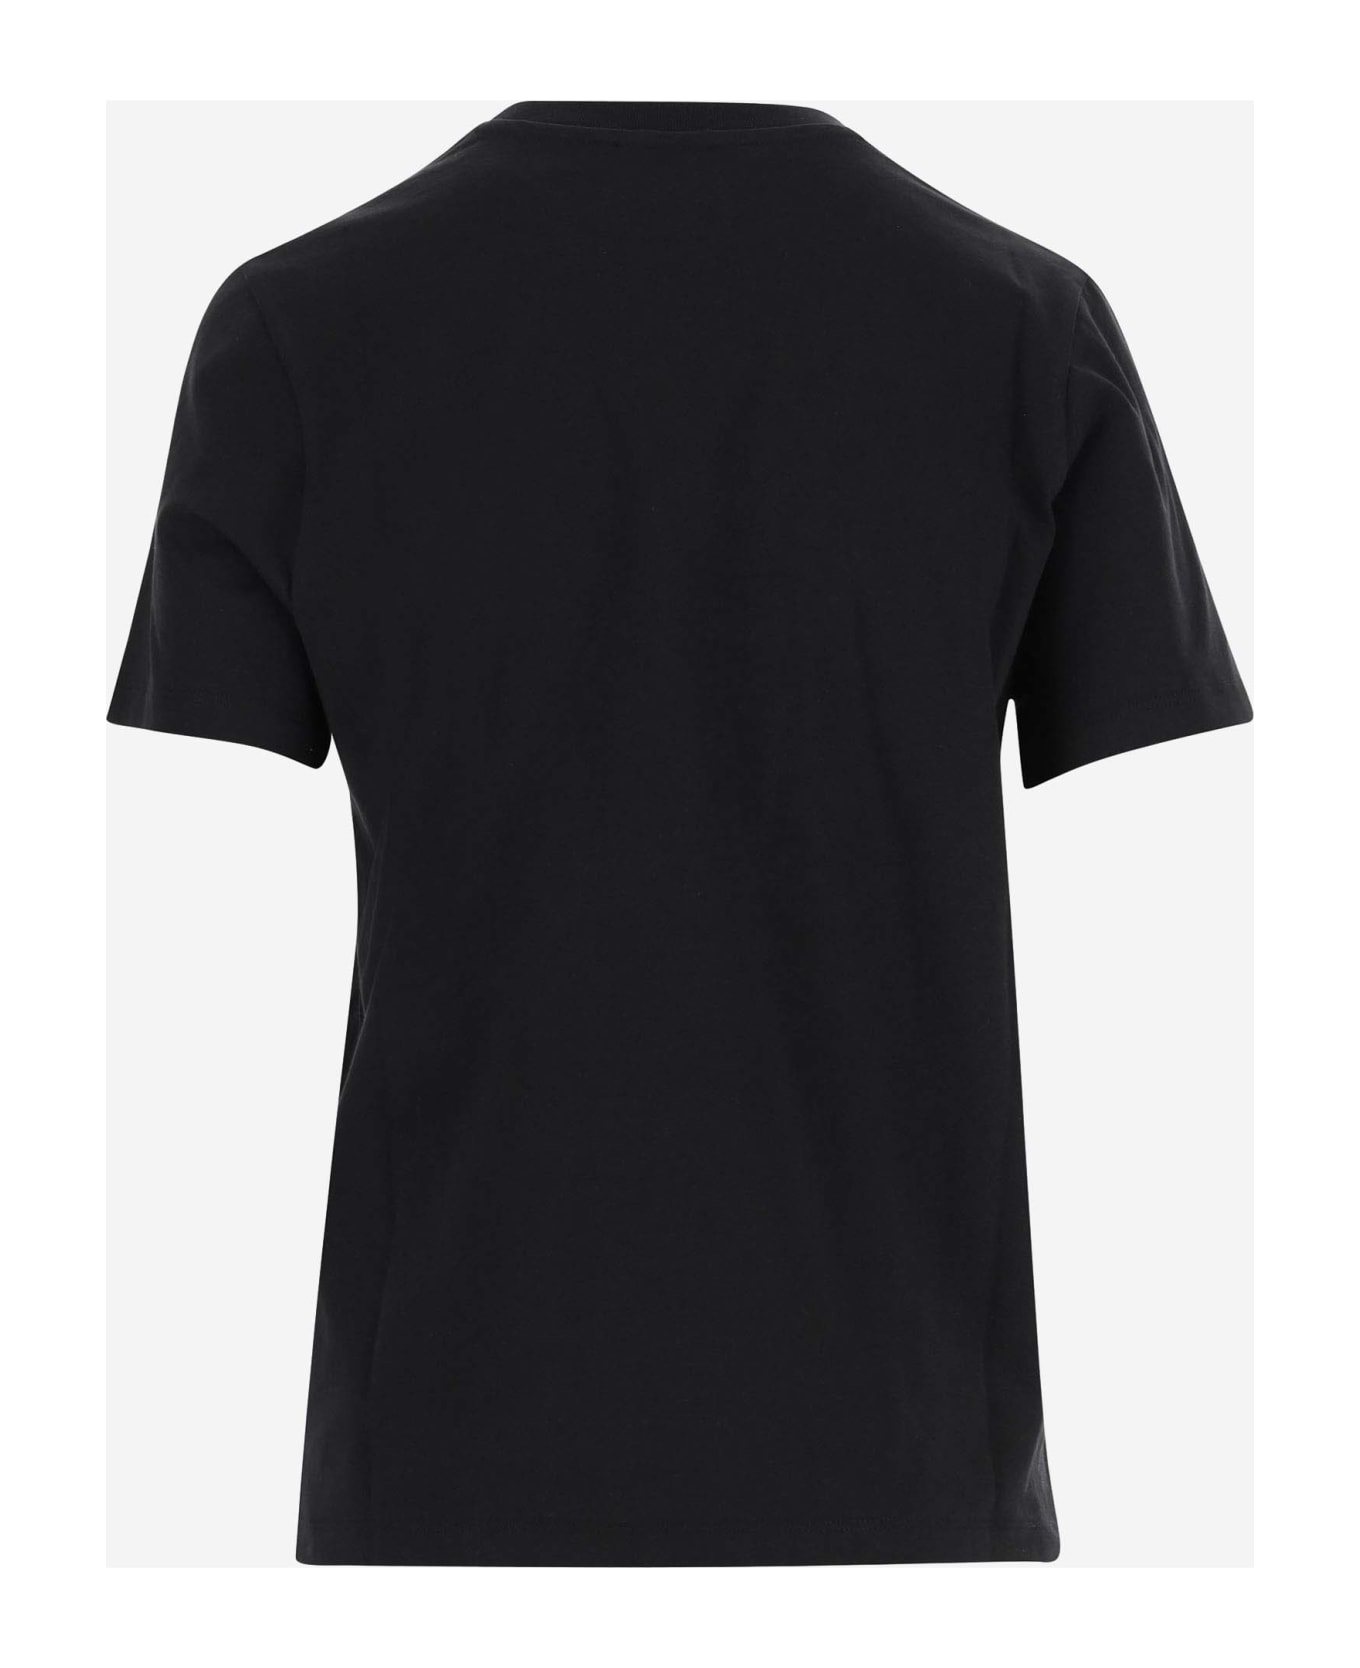 Coperni Boxy Logo Printed Crewneck T-shirt - Black Tシャツ